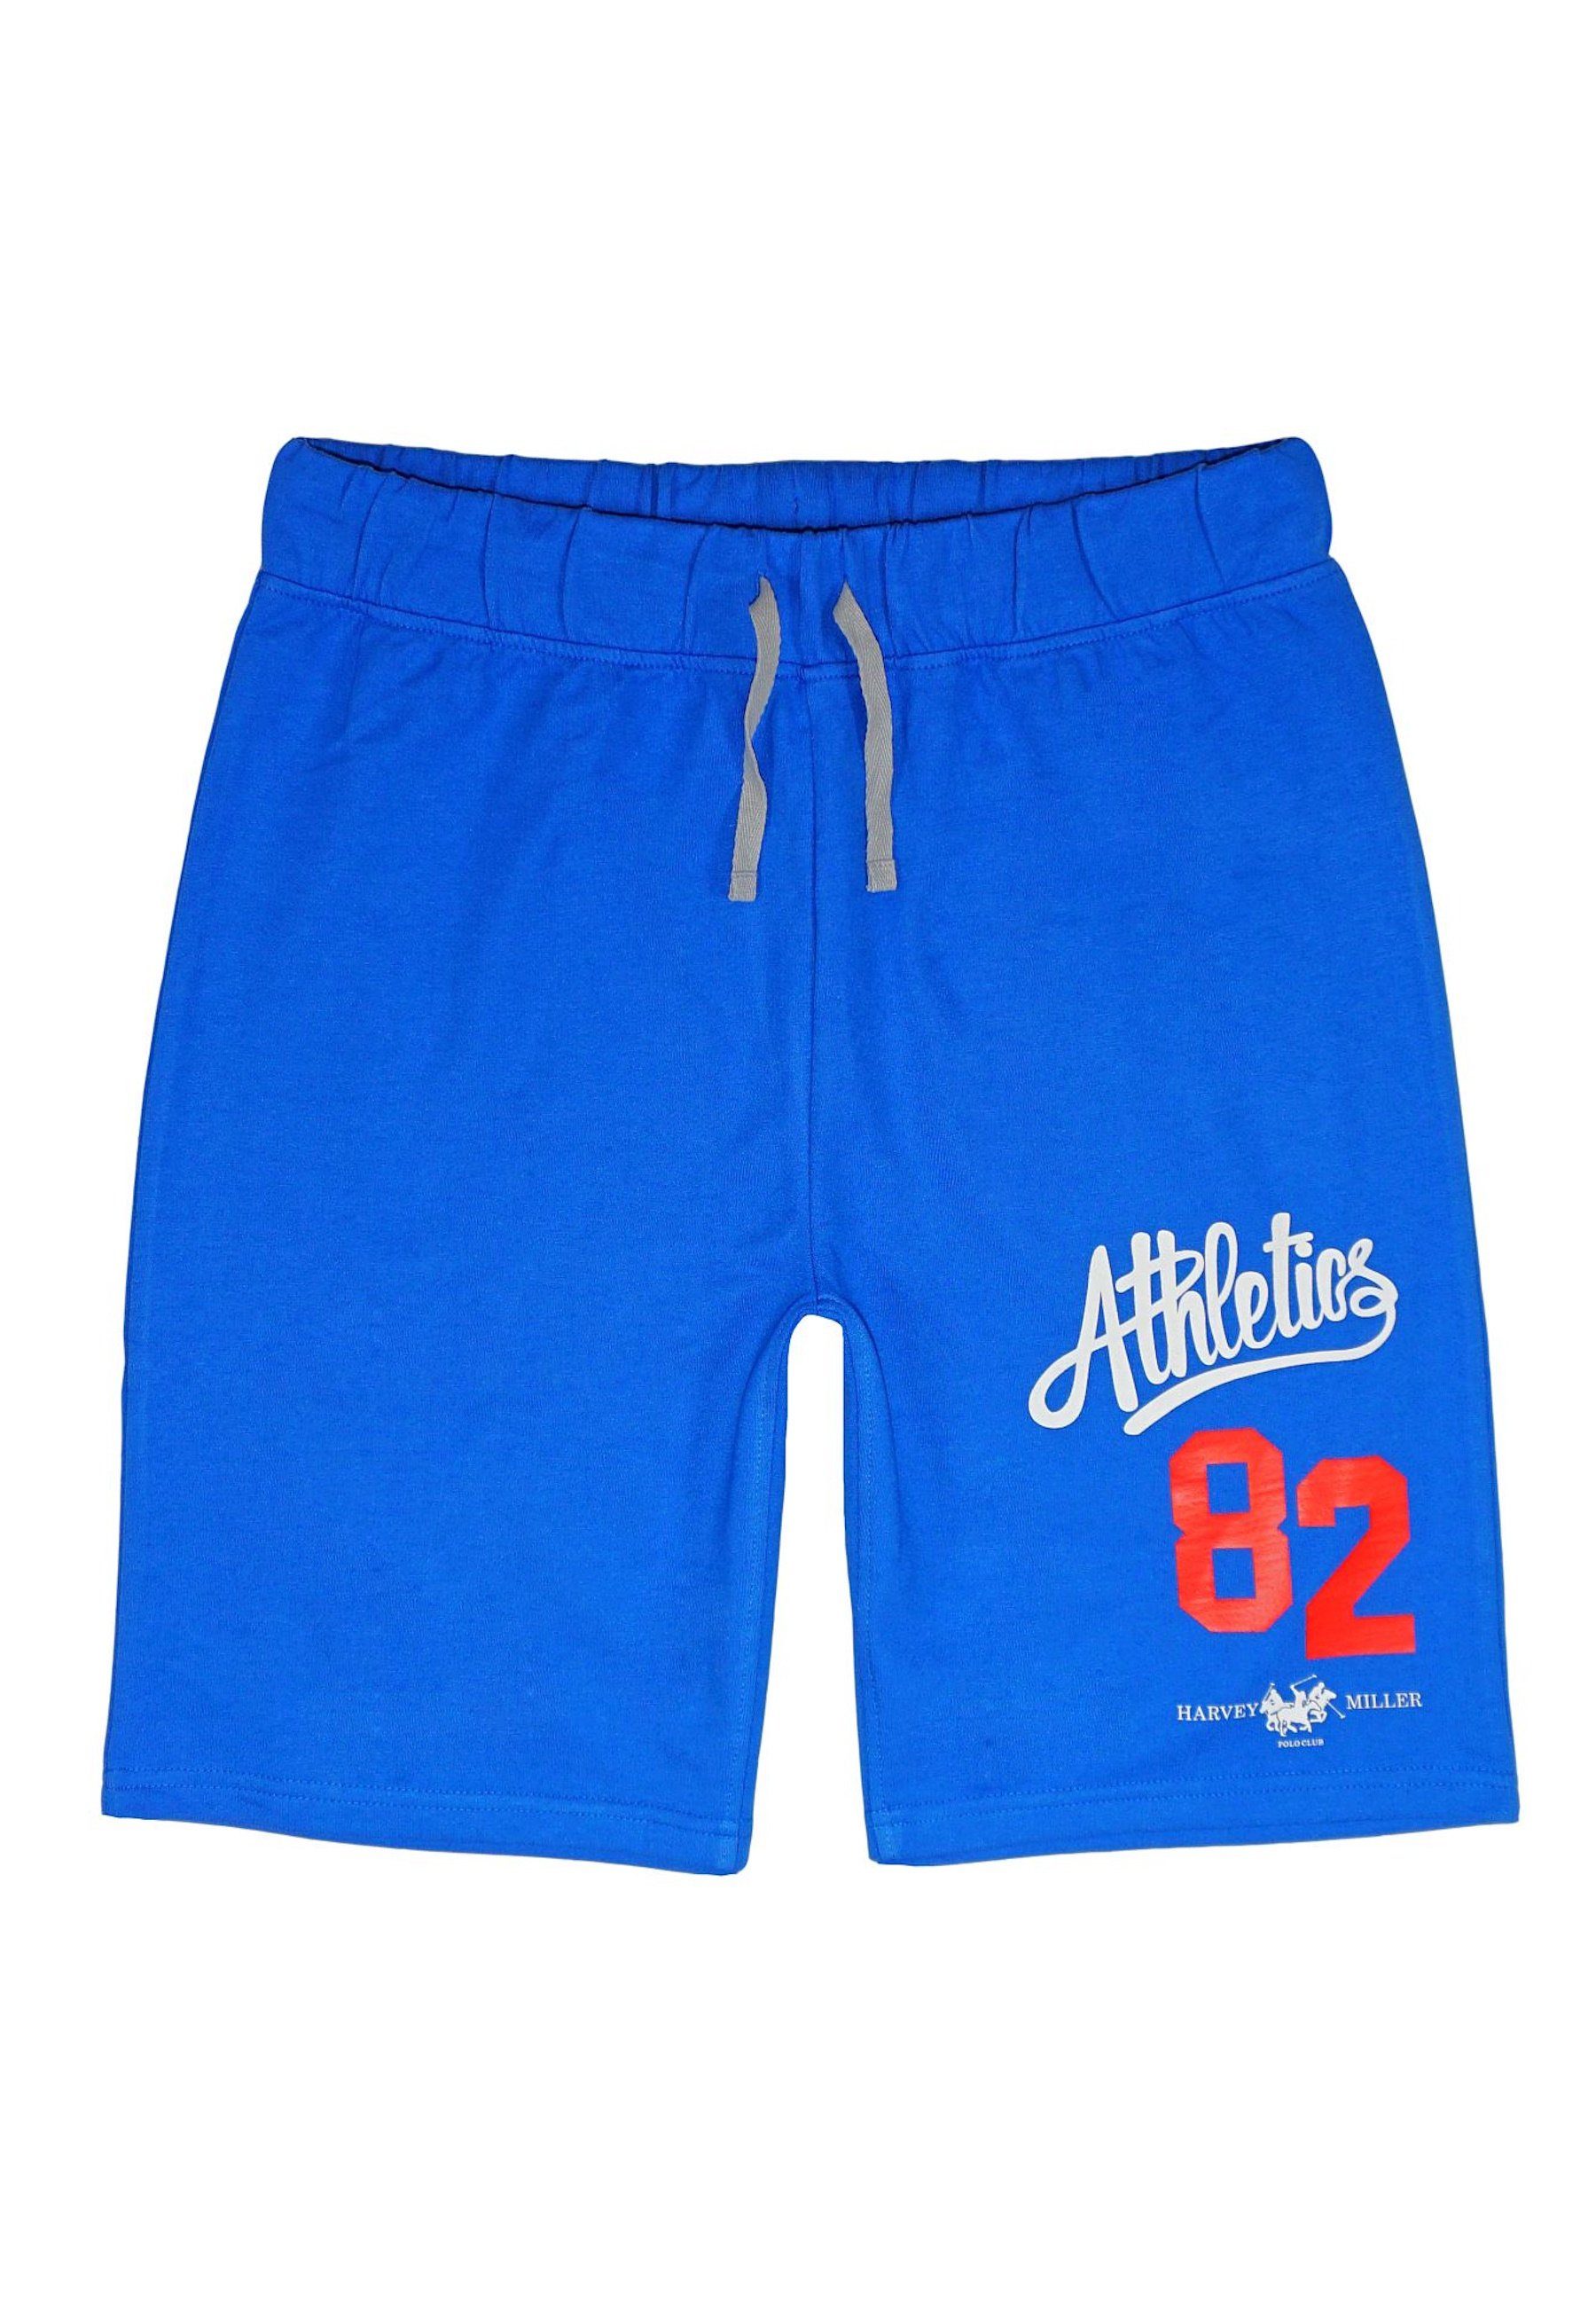 Harvey Miller Sweatshorts Hose kurze Stoffhose ATHLETICS 82 Sweatshorts blau